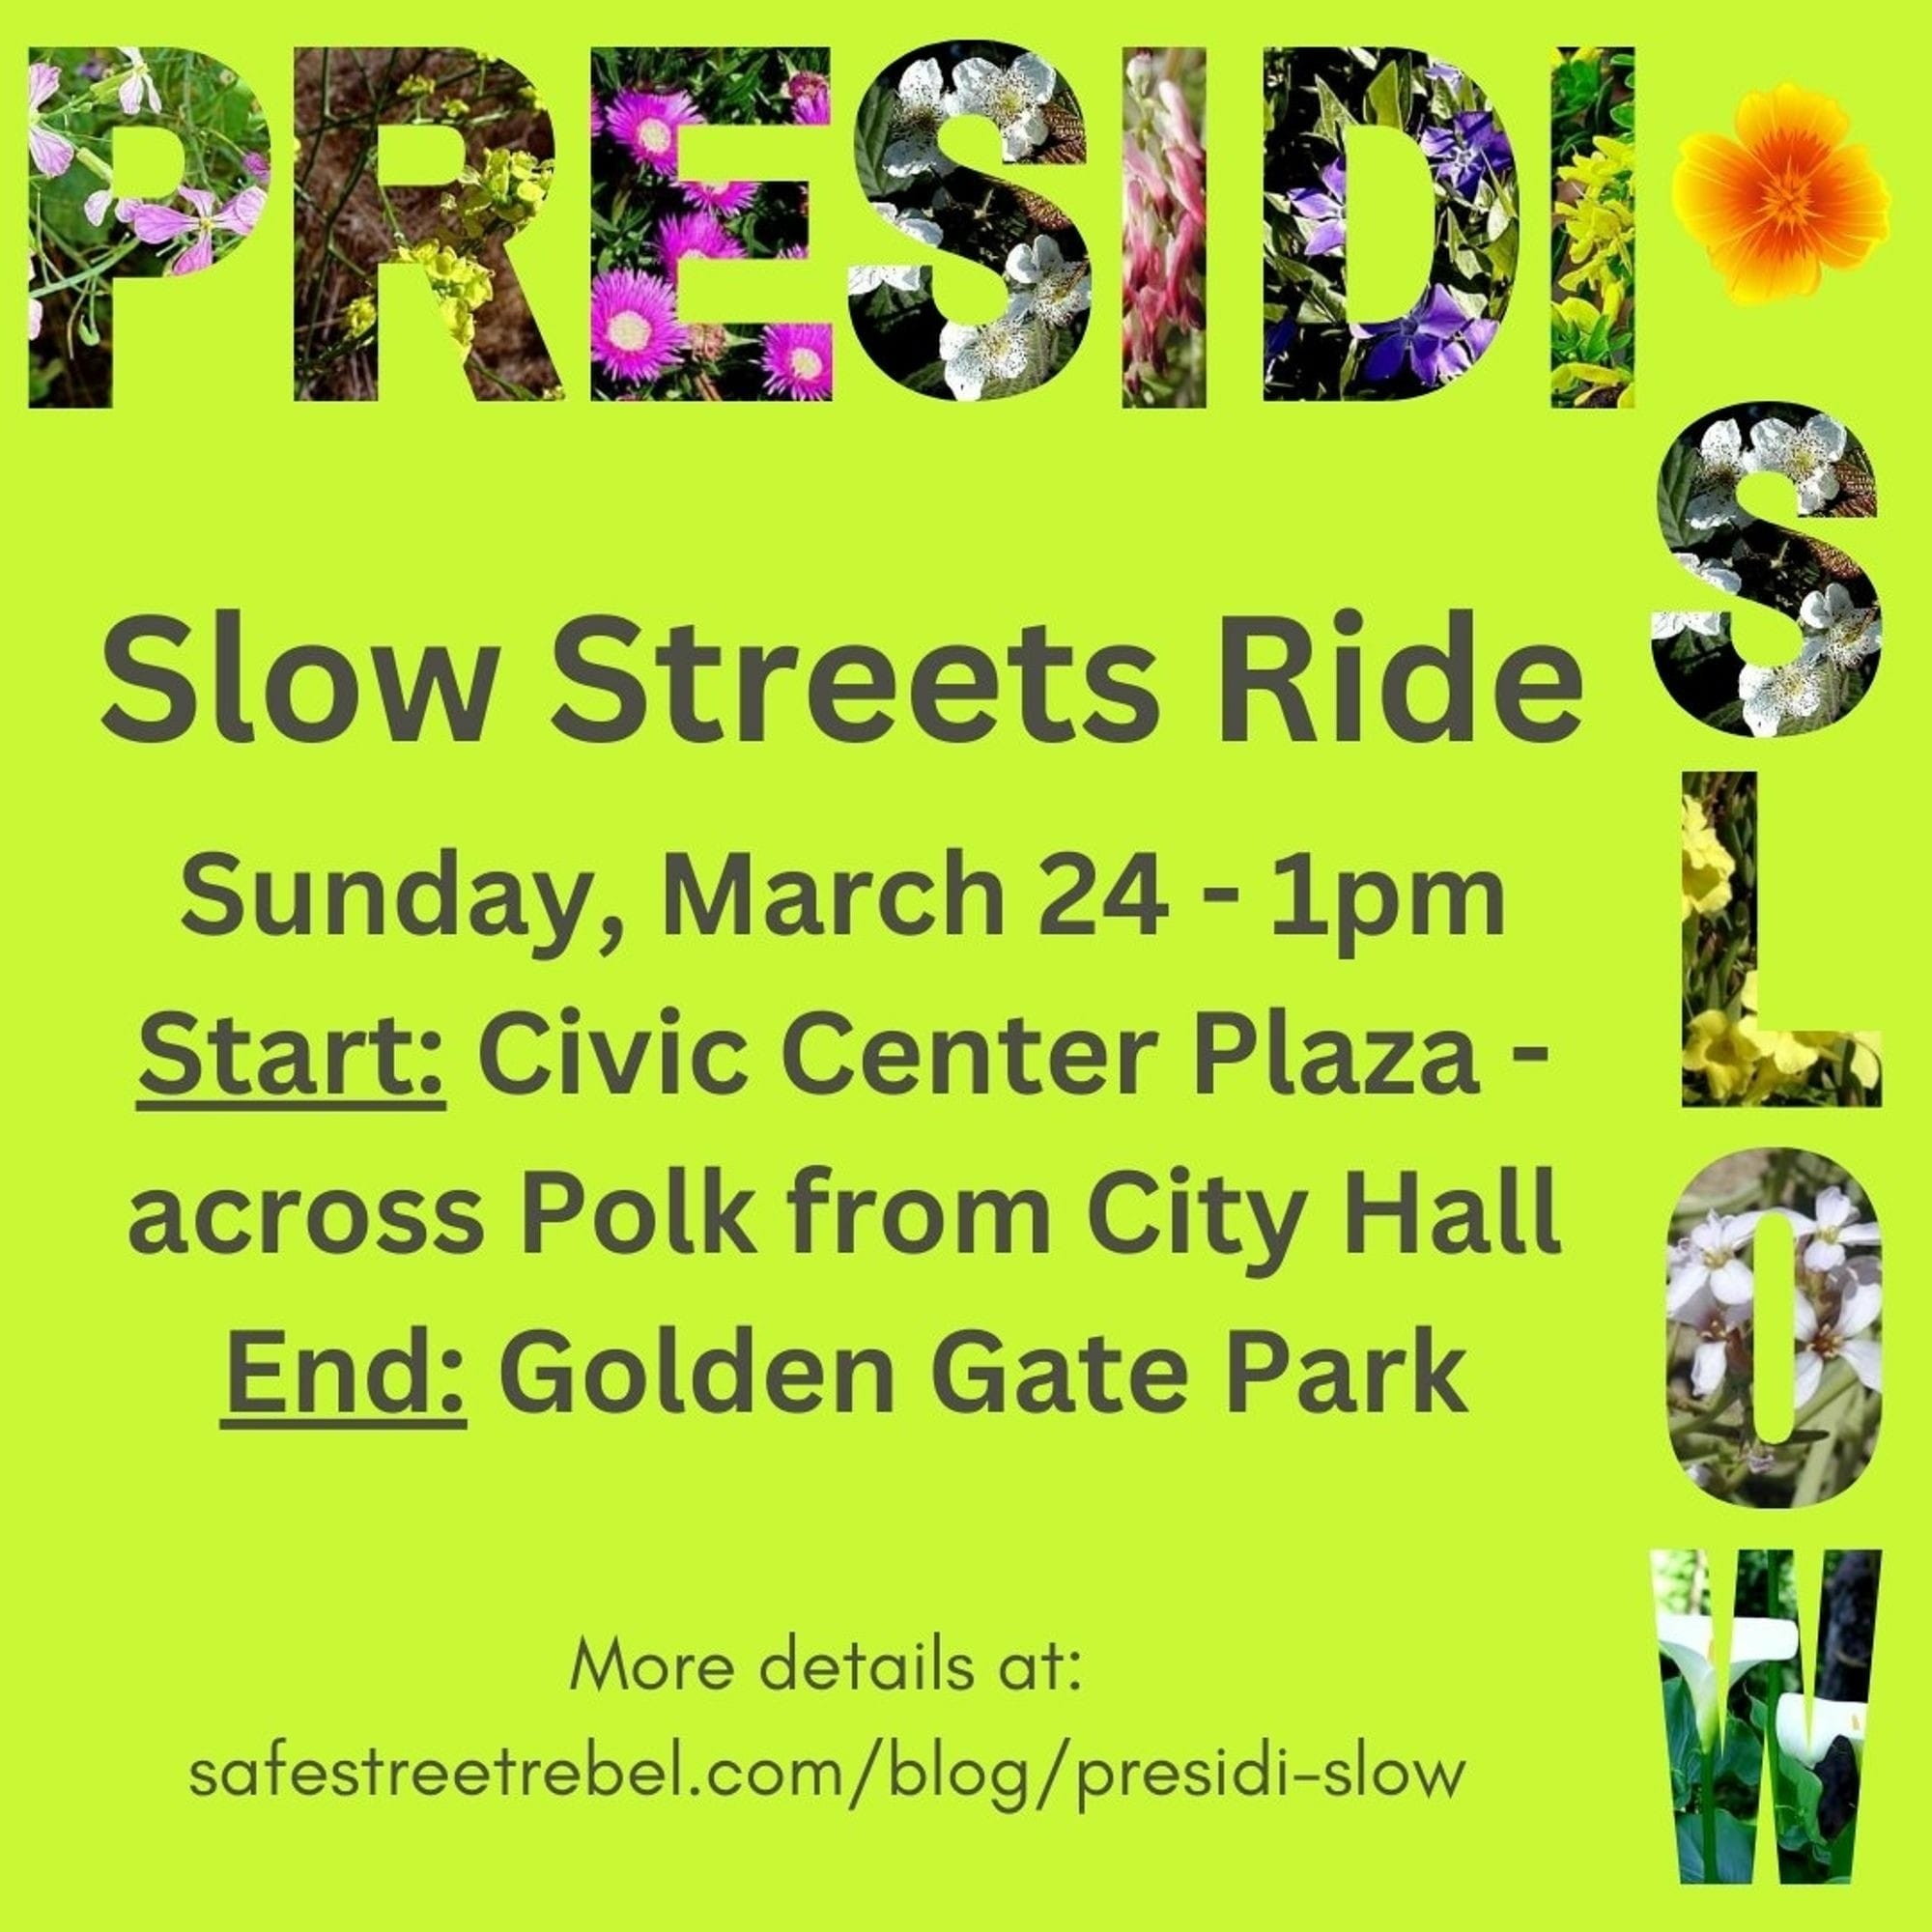 Reminder: Presidi-SLOW Streets Ride this Sunday